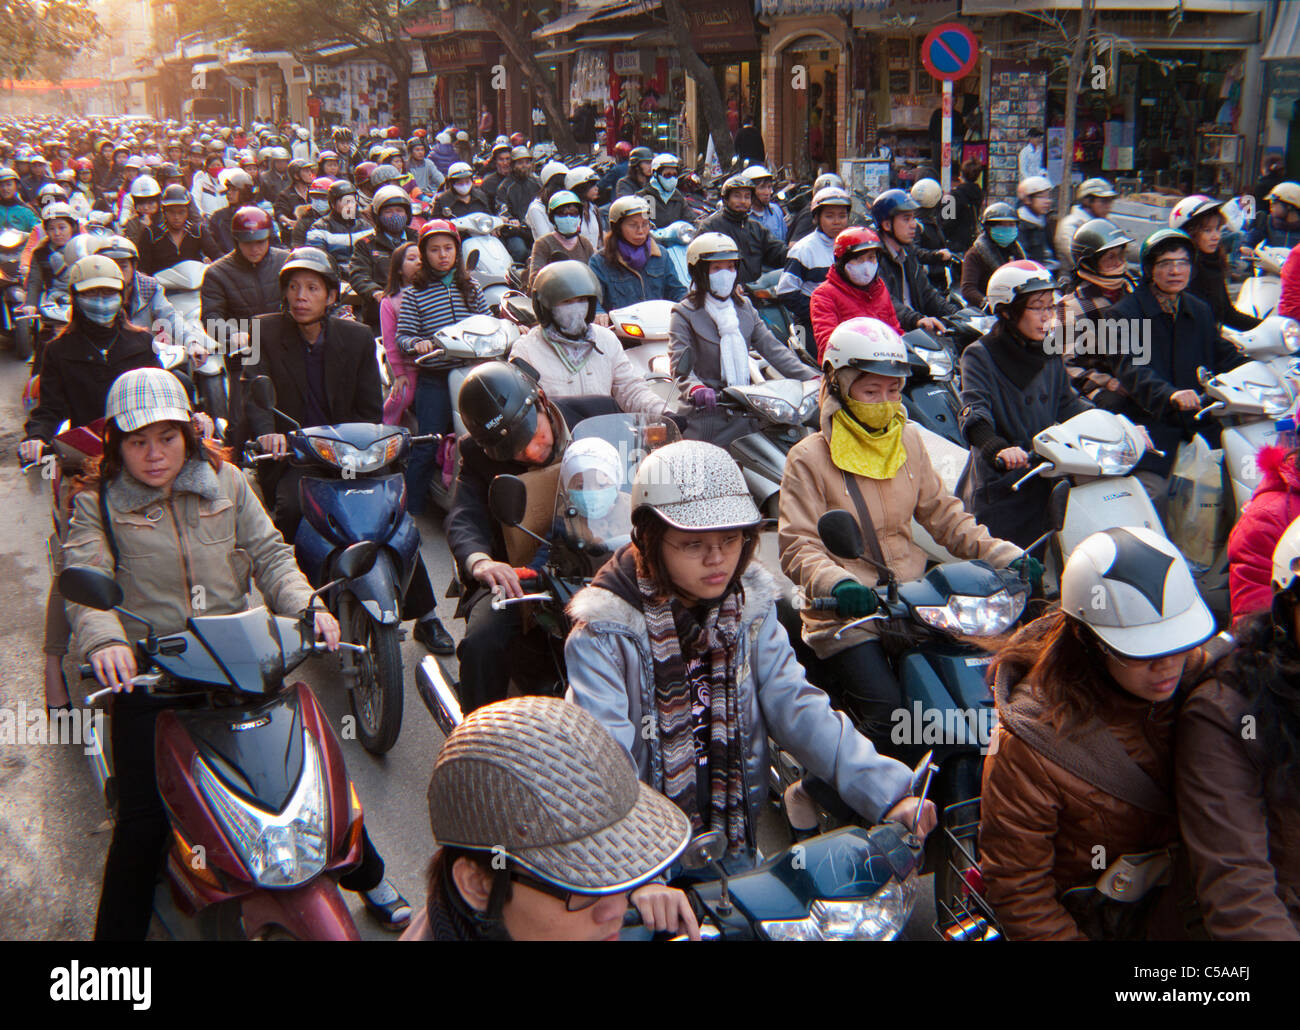 late-afternoon-rush-hour-motorbike-traffic-in-hang-gai-st-hanoi-old-C5AAFJ.jpg